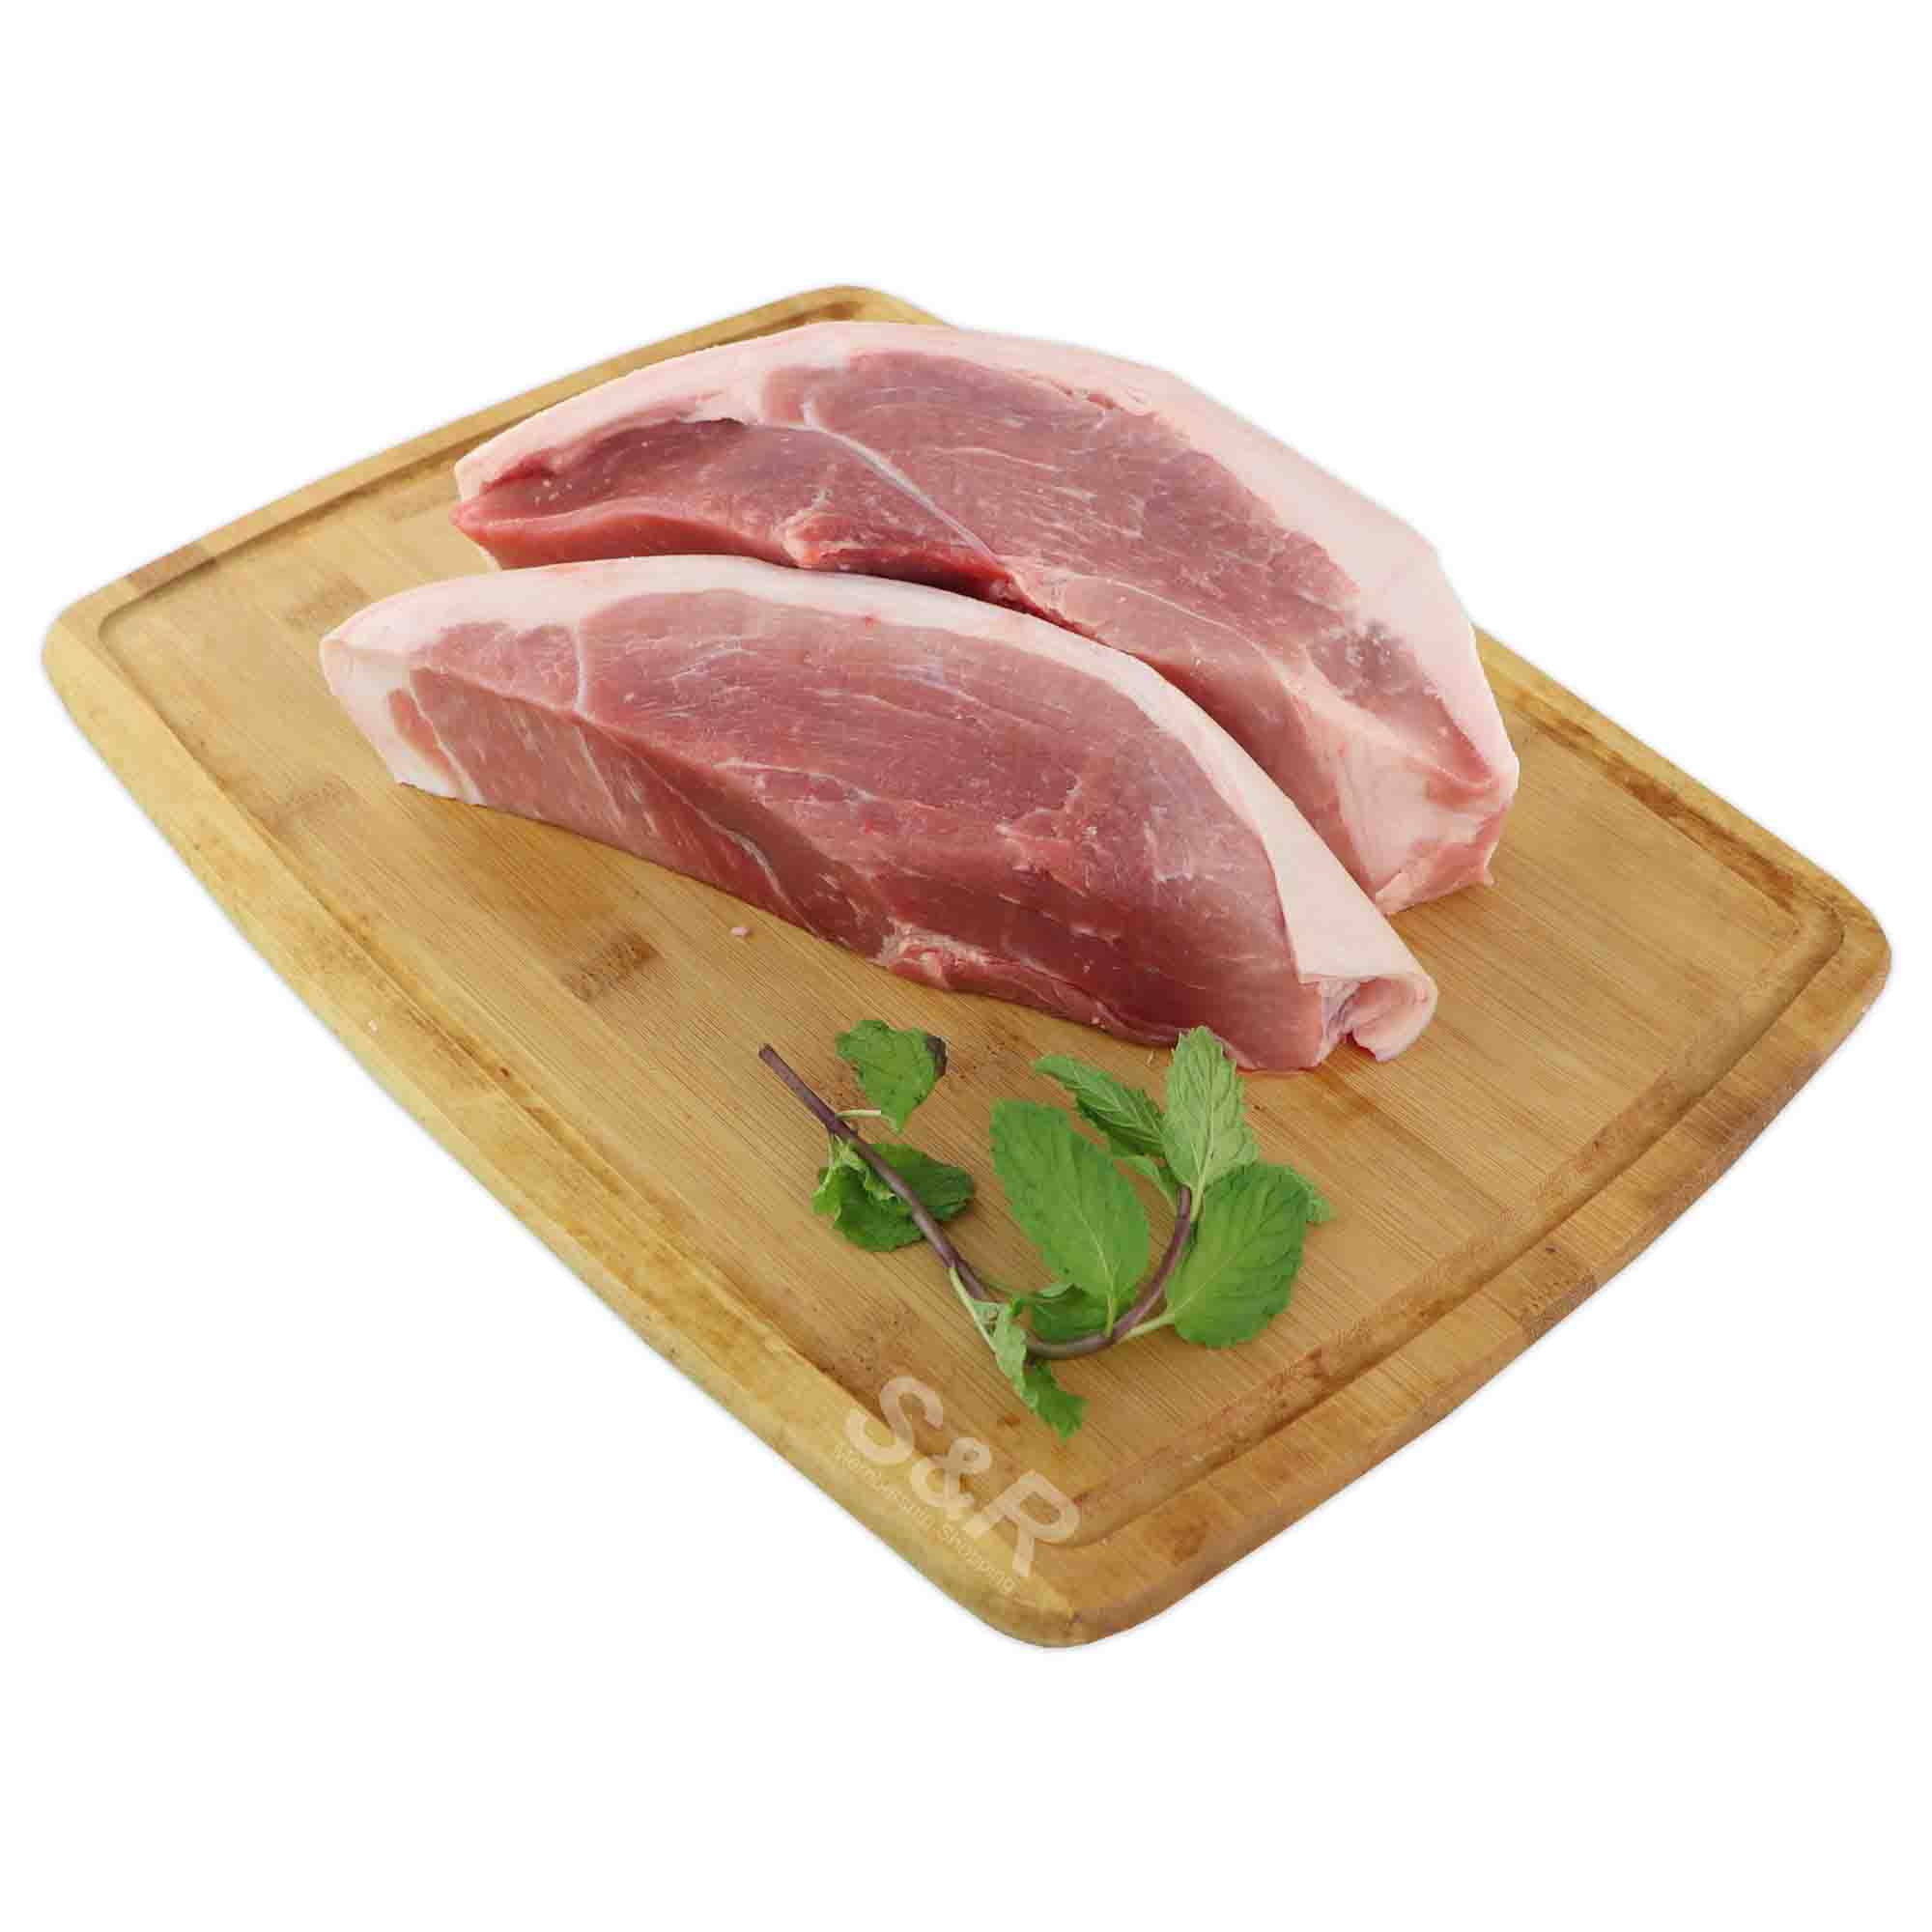 Members' Value Pork Pigue Skin-on Boneless approx. 2kg